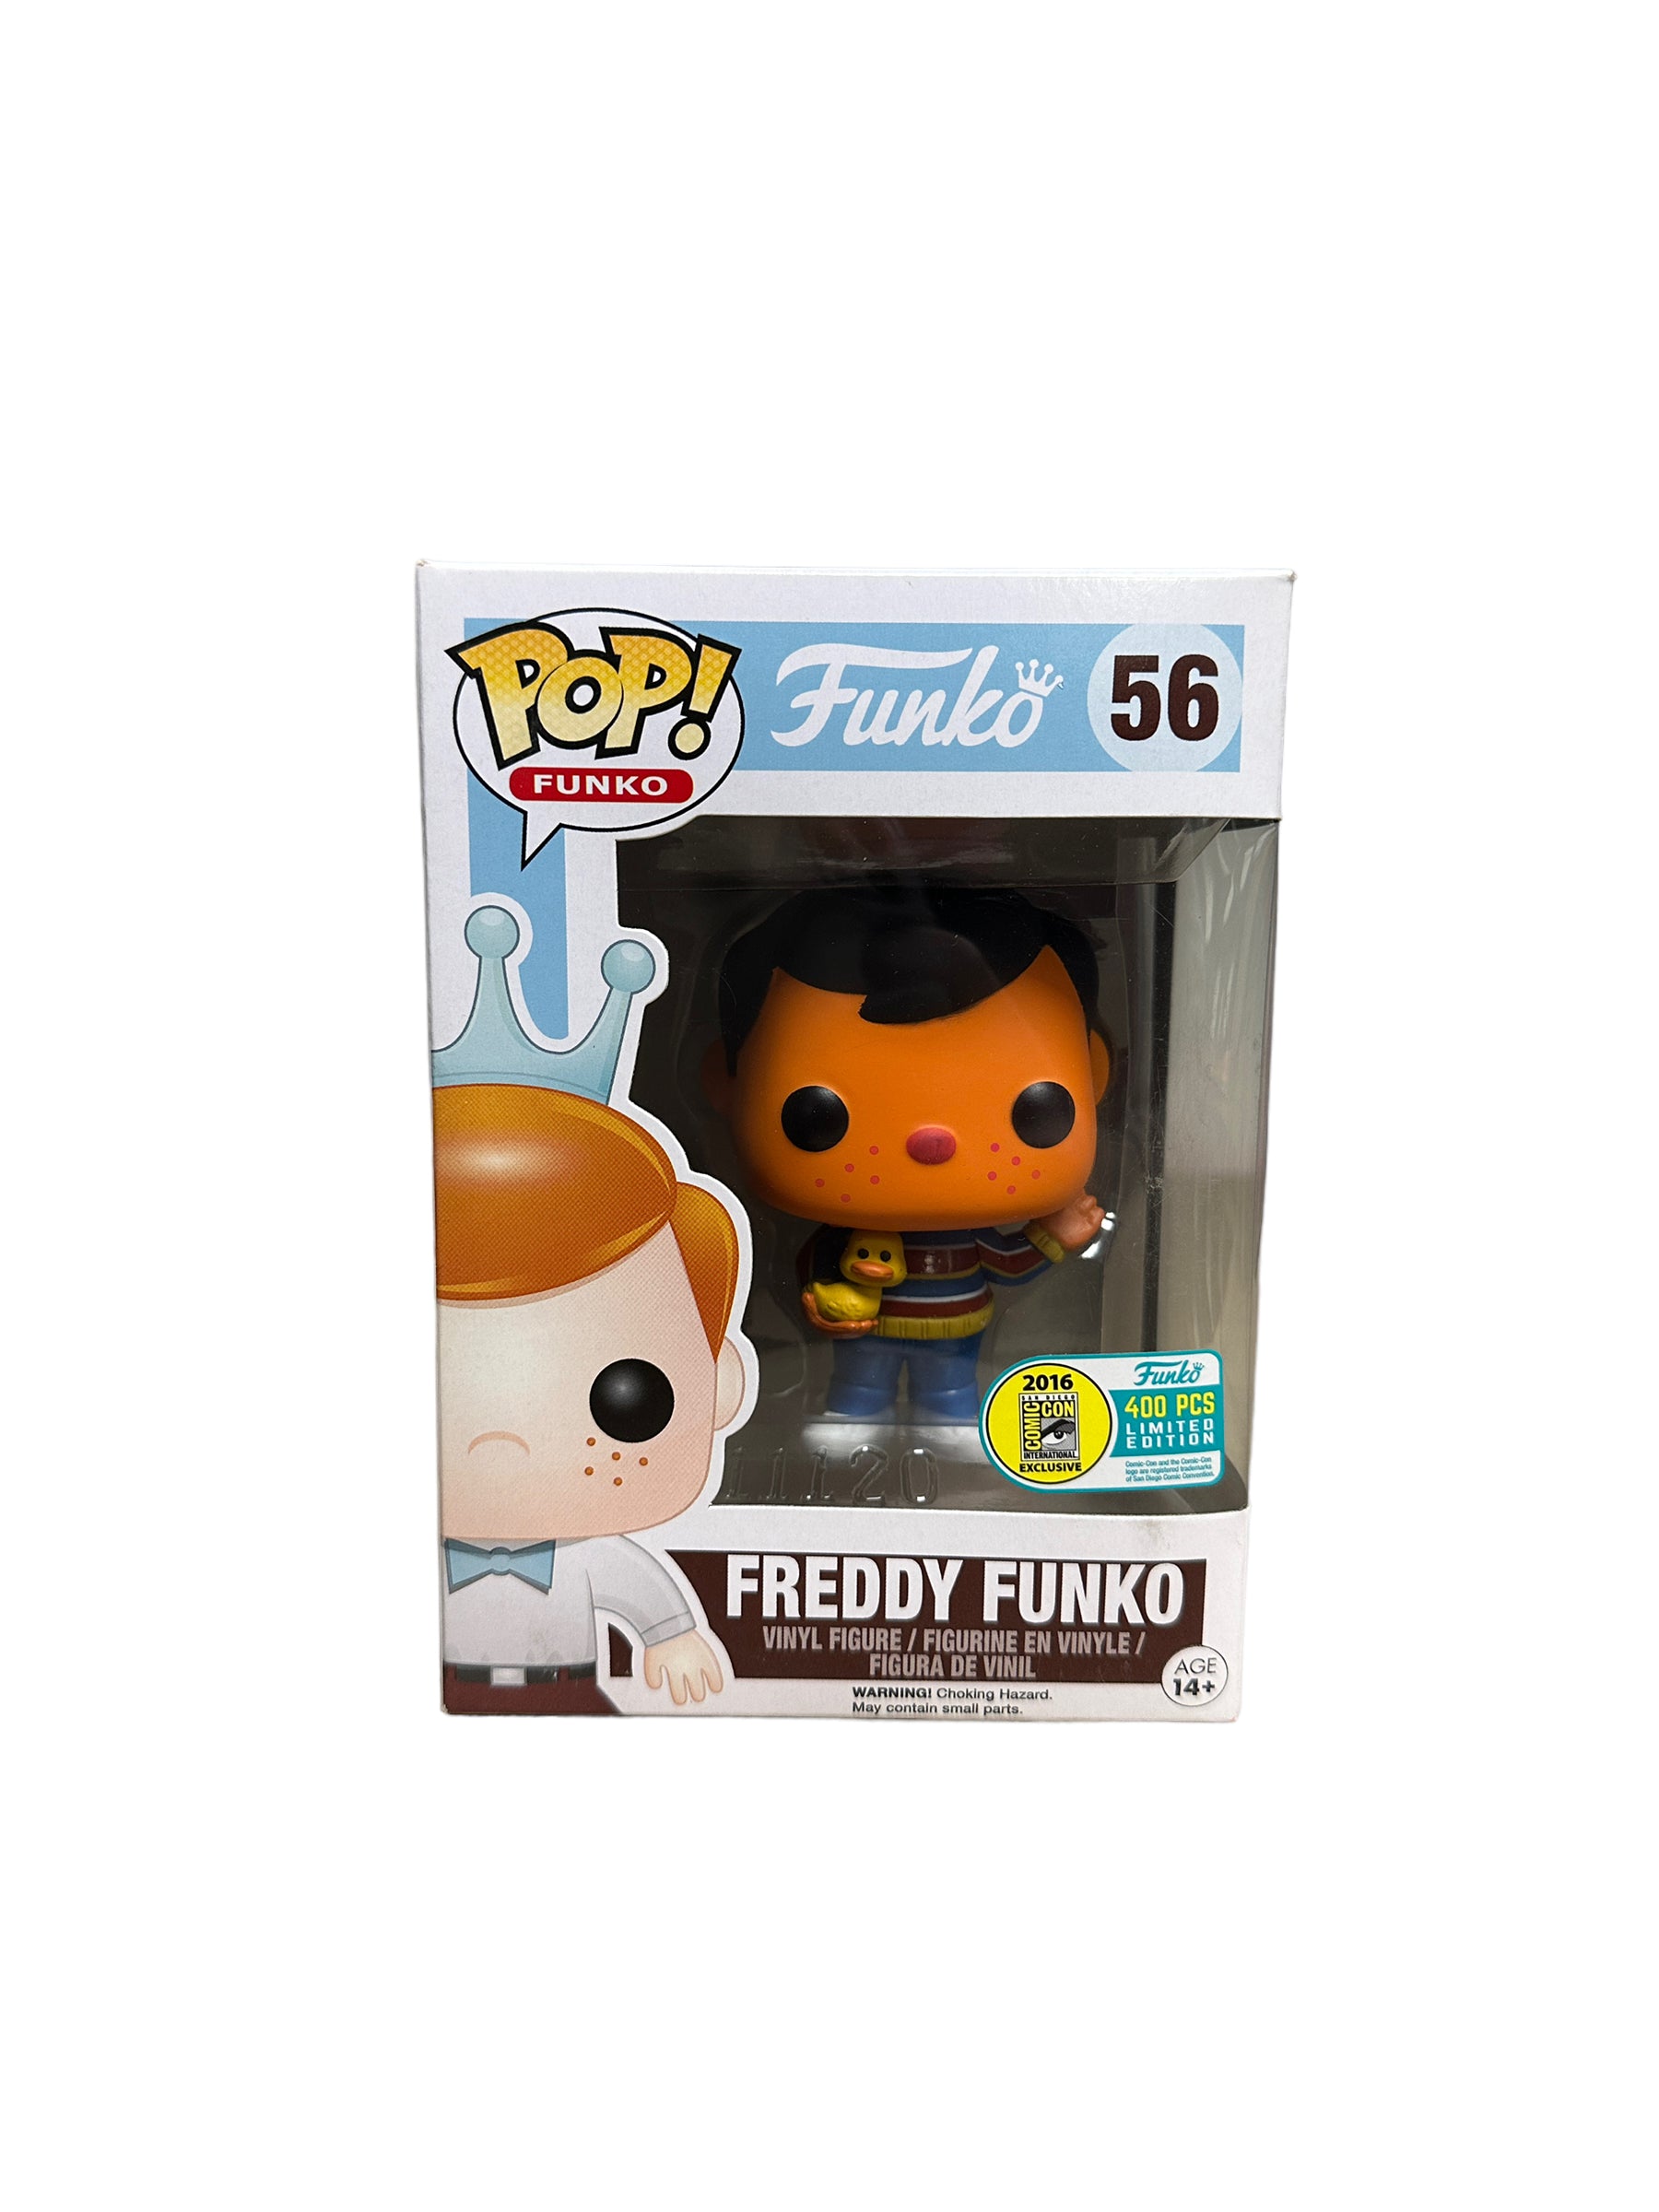 Freddy Funko as Ernie #56 Funko Pop! - SDCC 2016 Exclusive LE400 Pcs - Condition 7.5/10